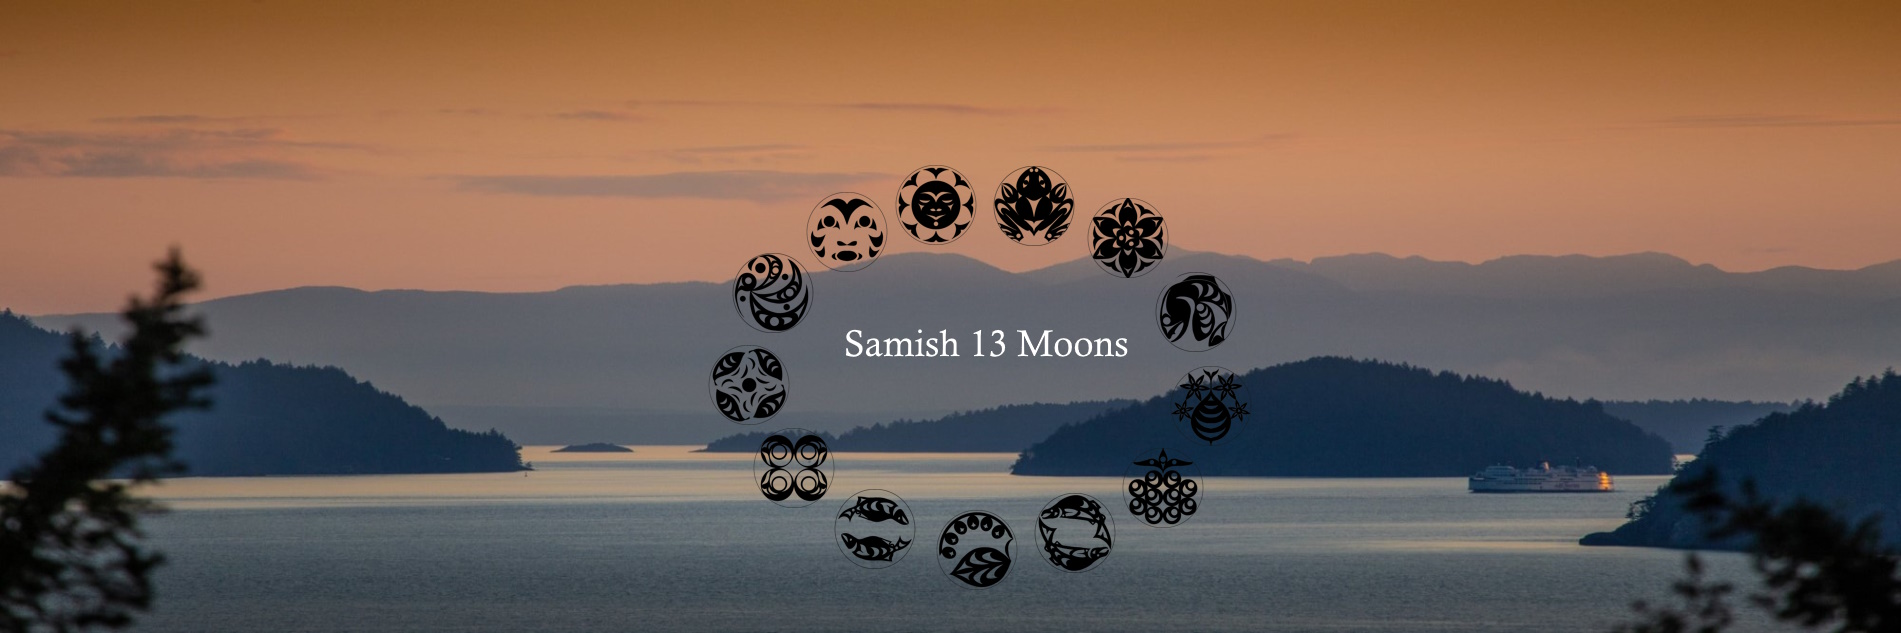 13 moons storymap slider image